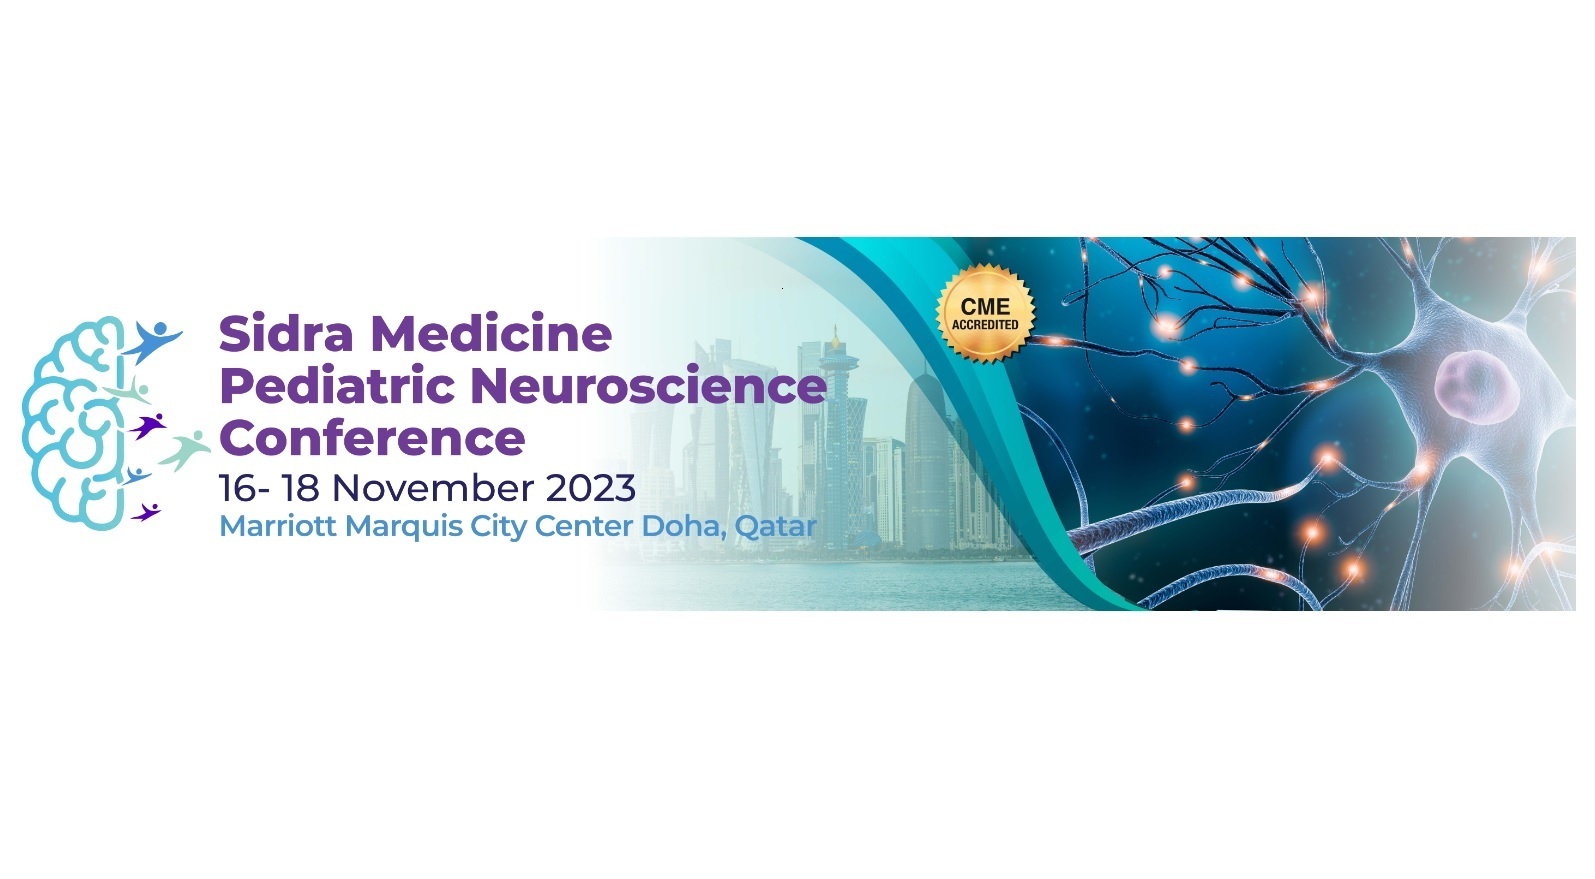 Sidra Medicine’s Pediatric Neuroscience Conference 2023.